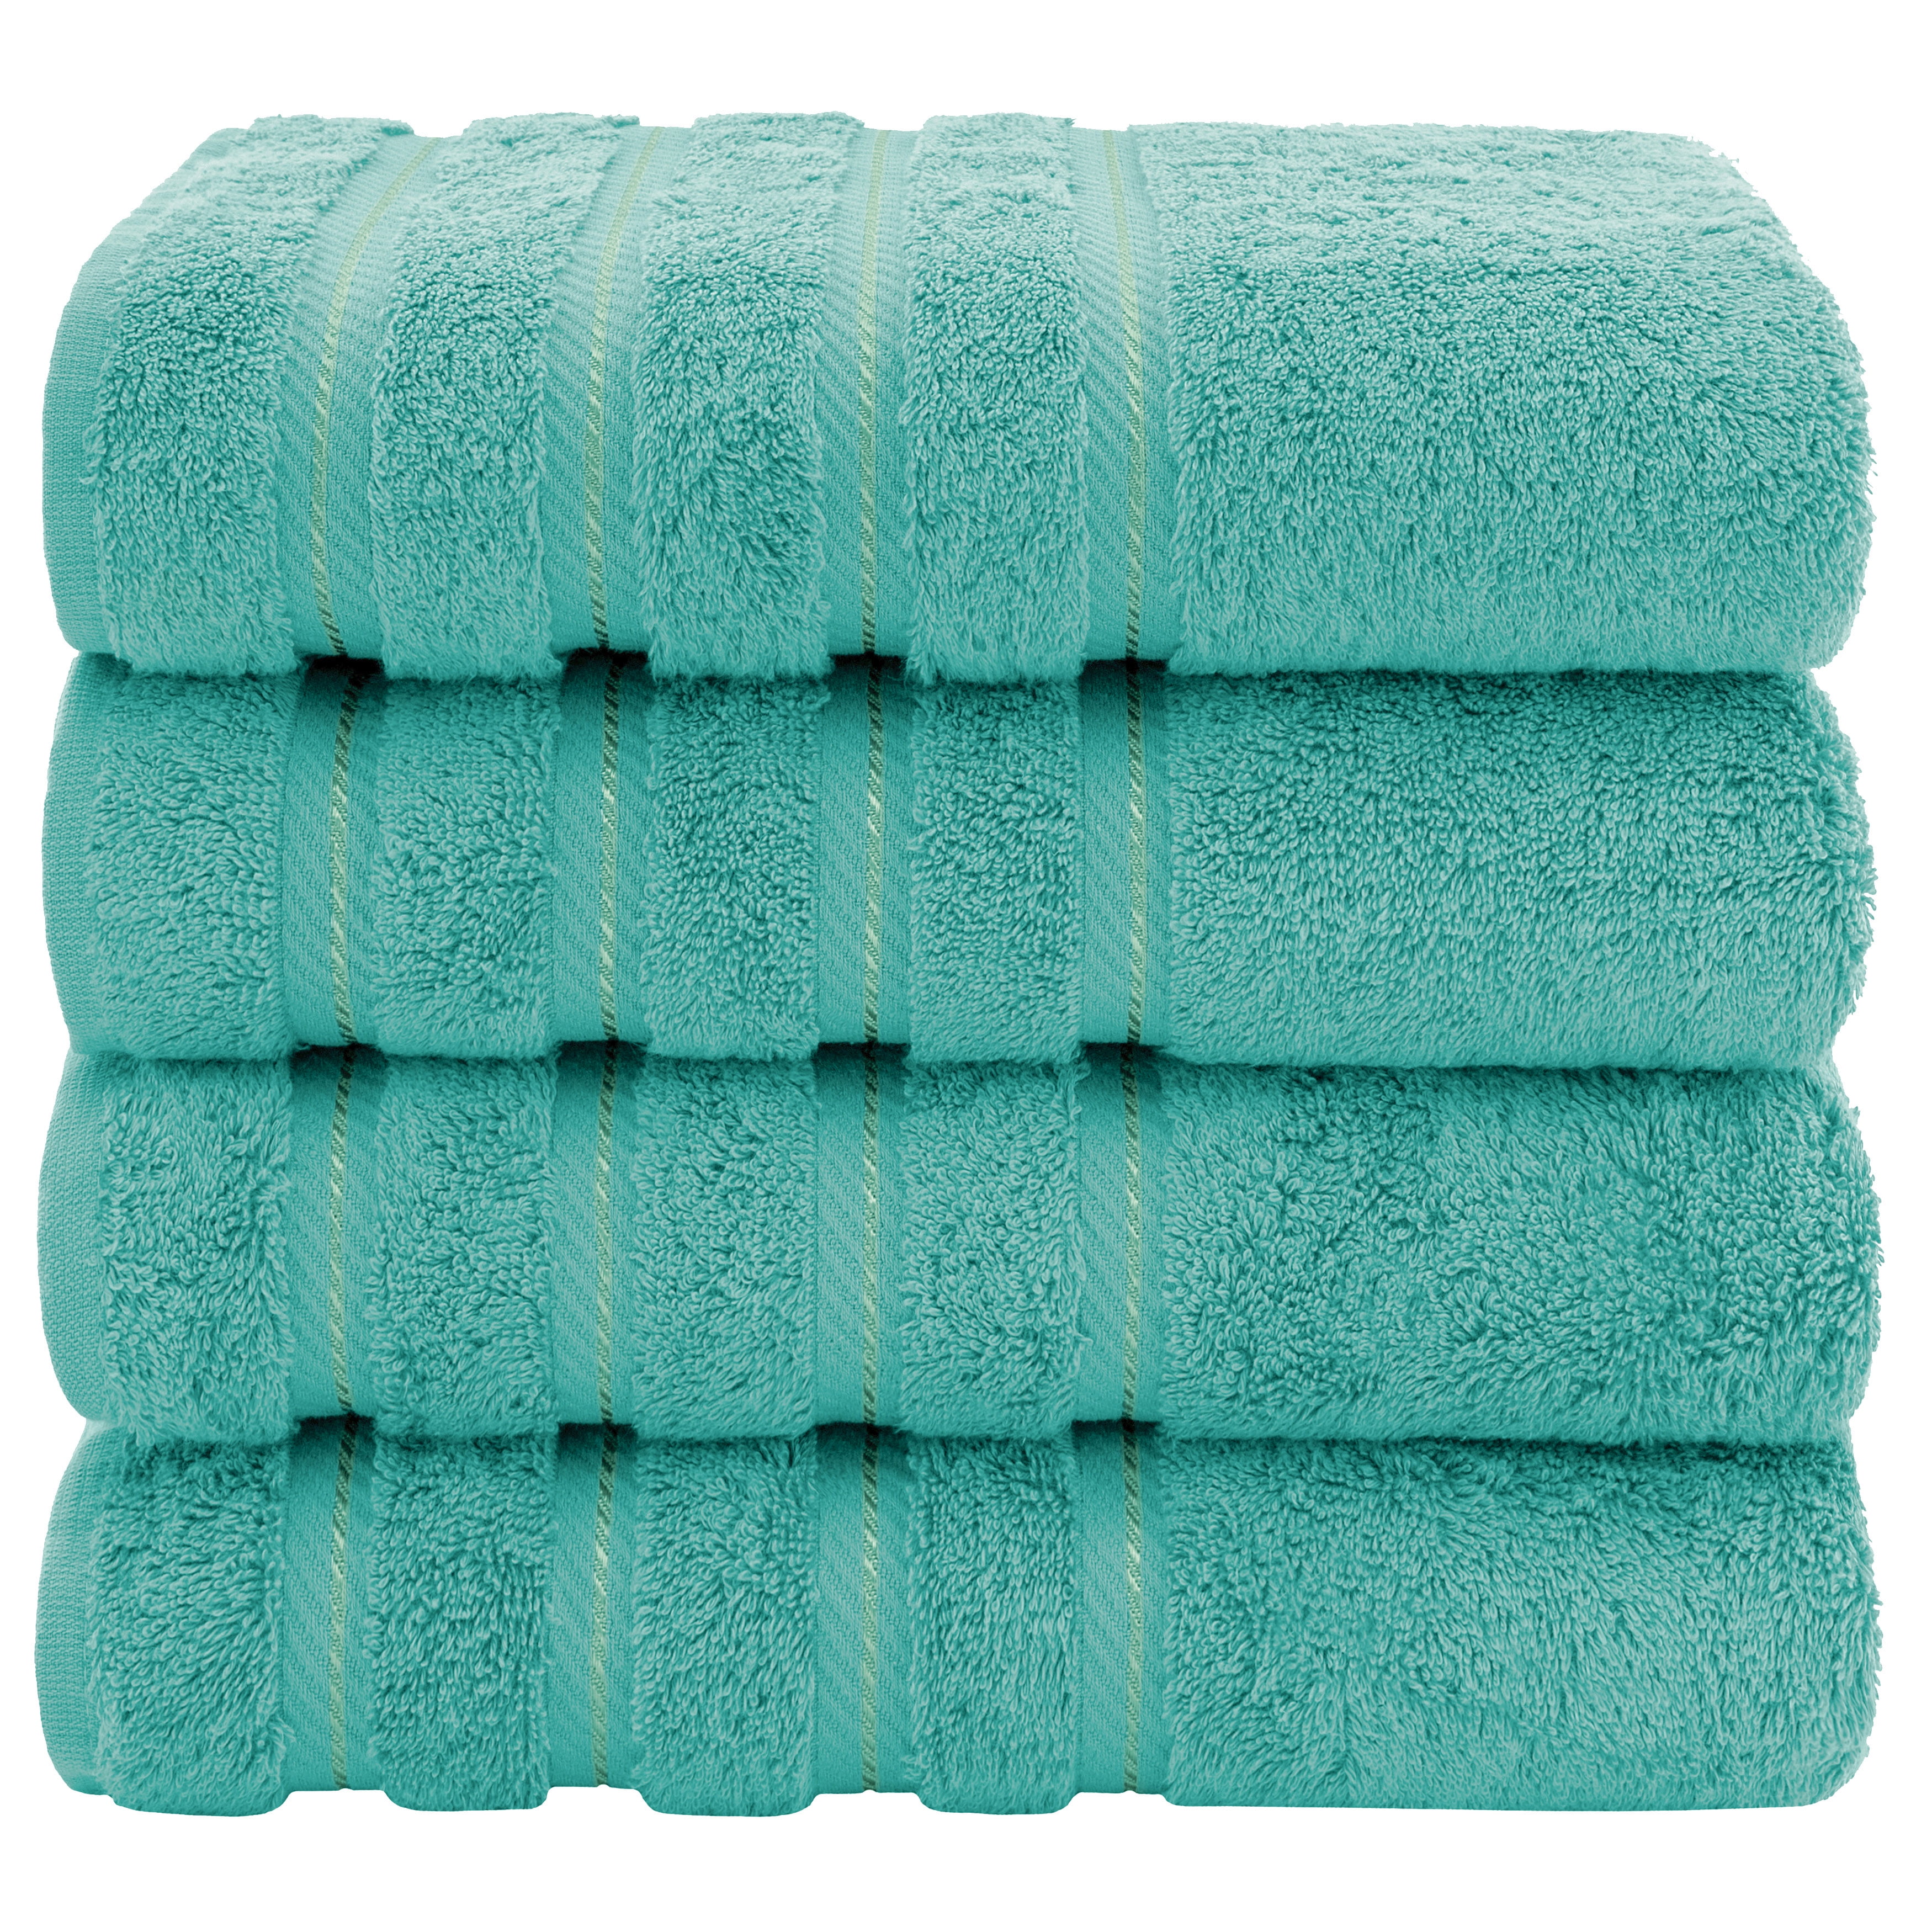 Buy Aquacado 68 x 136 cm Bath Towel Set of 2 Turq Blue & Irish